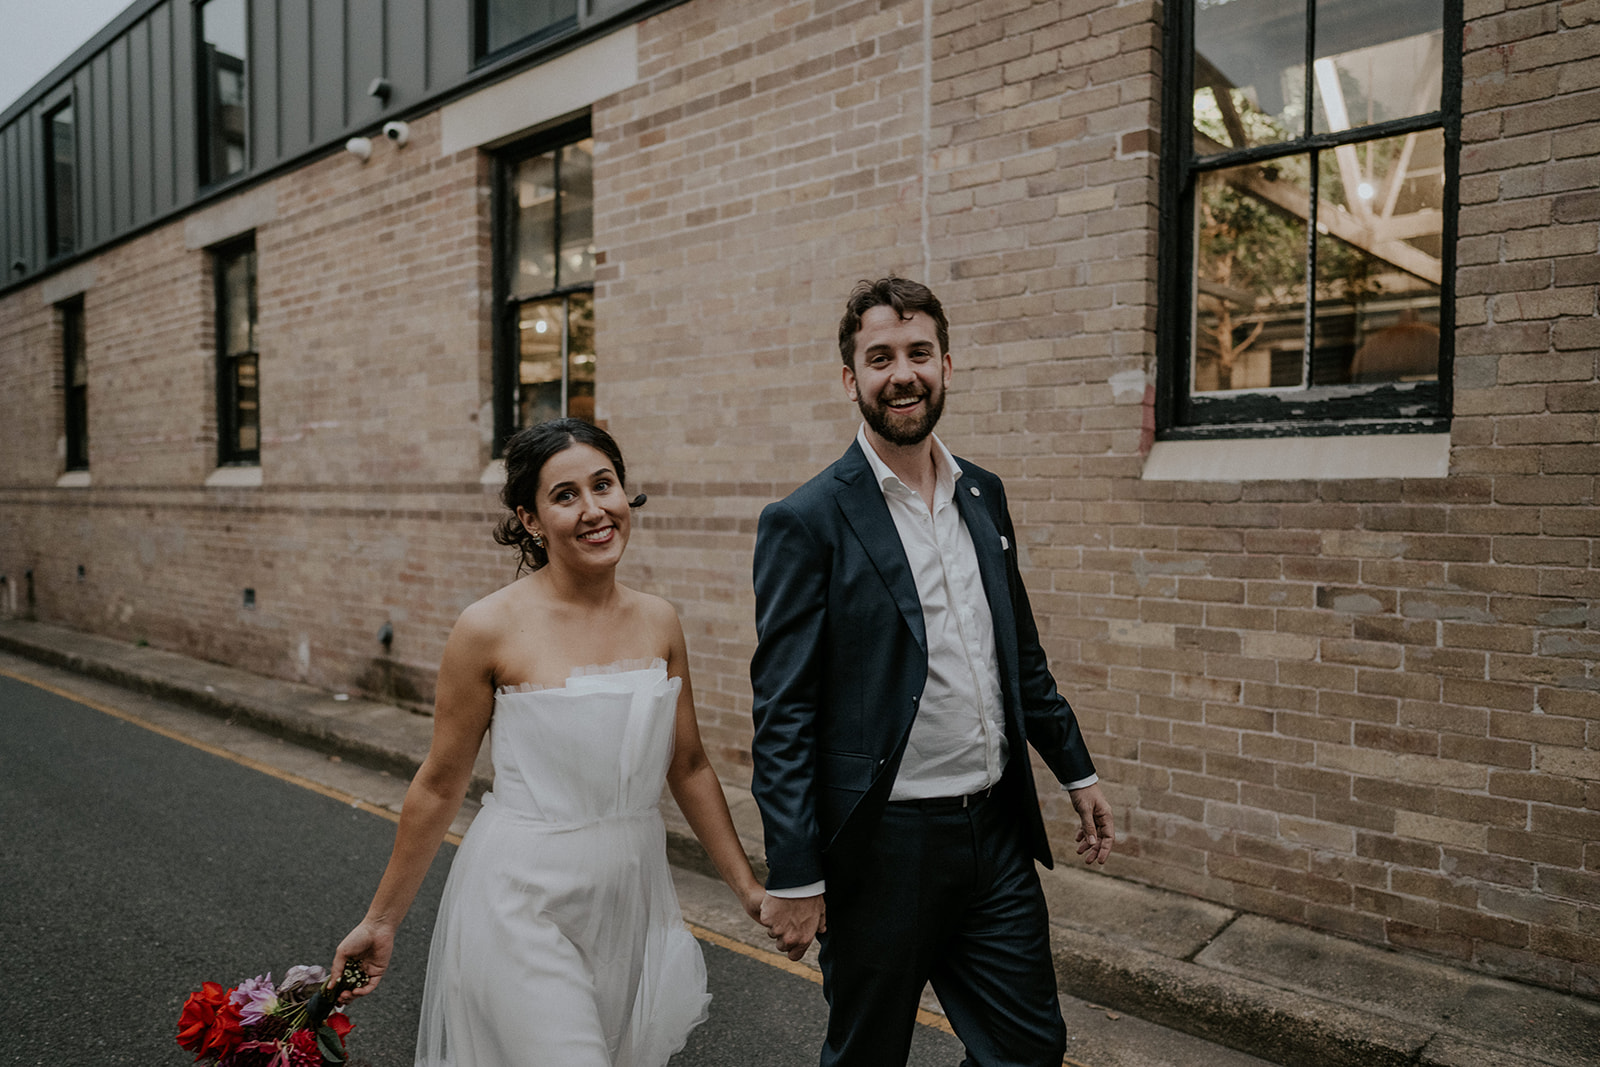 Scott Surplice portrait of bride and groom as they walk